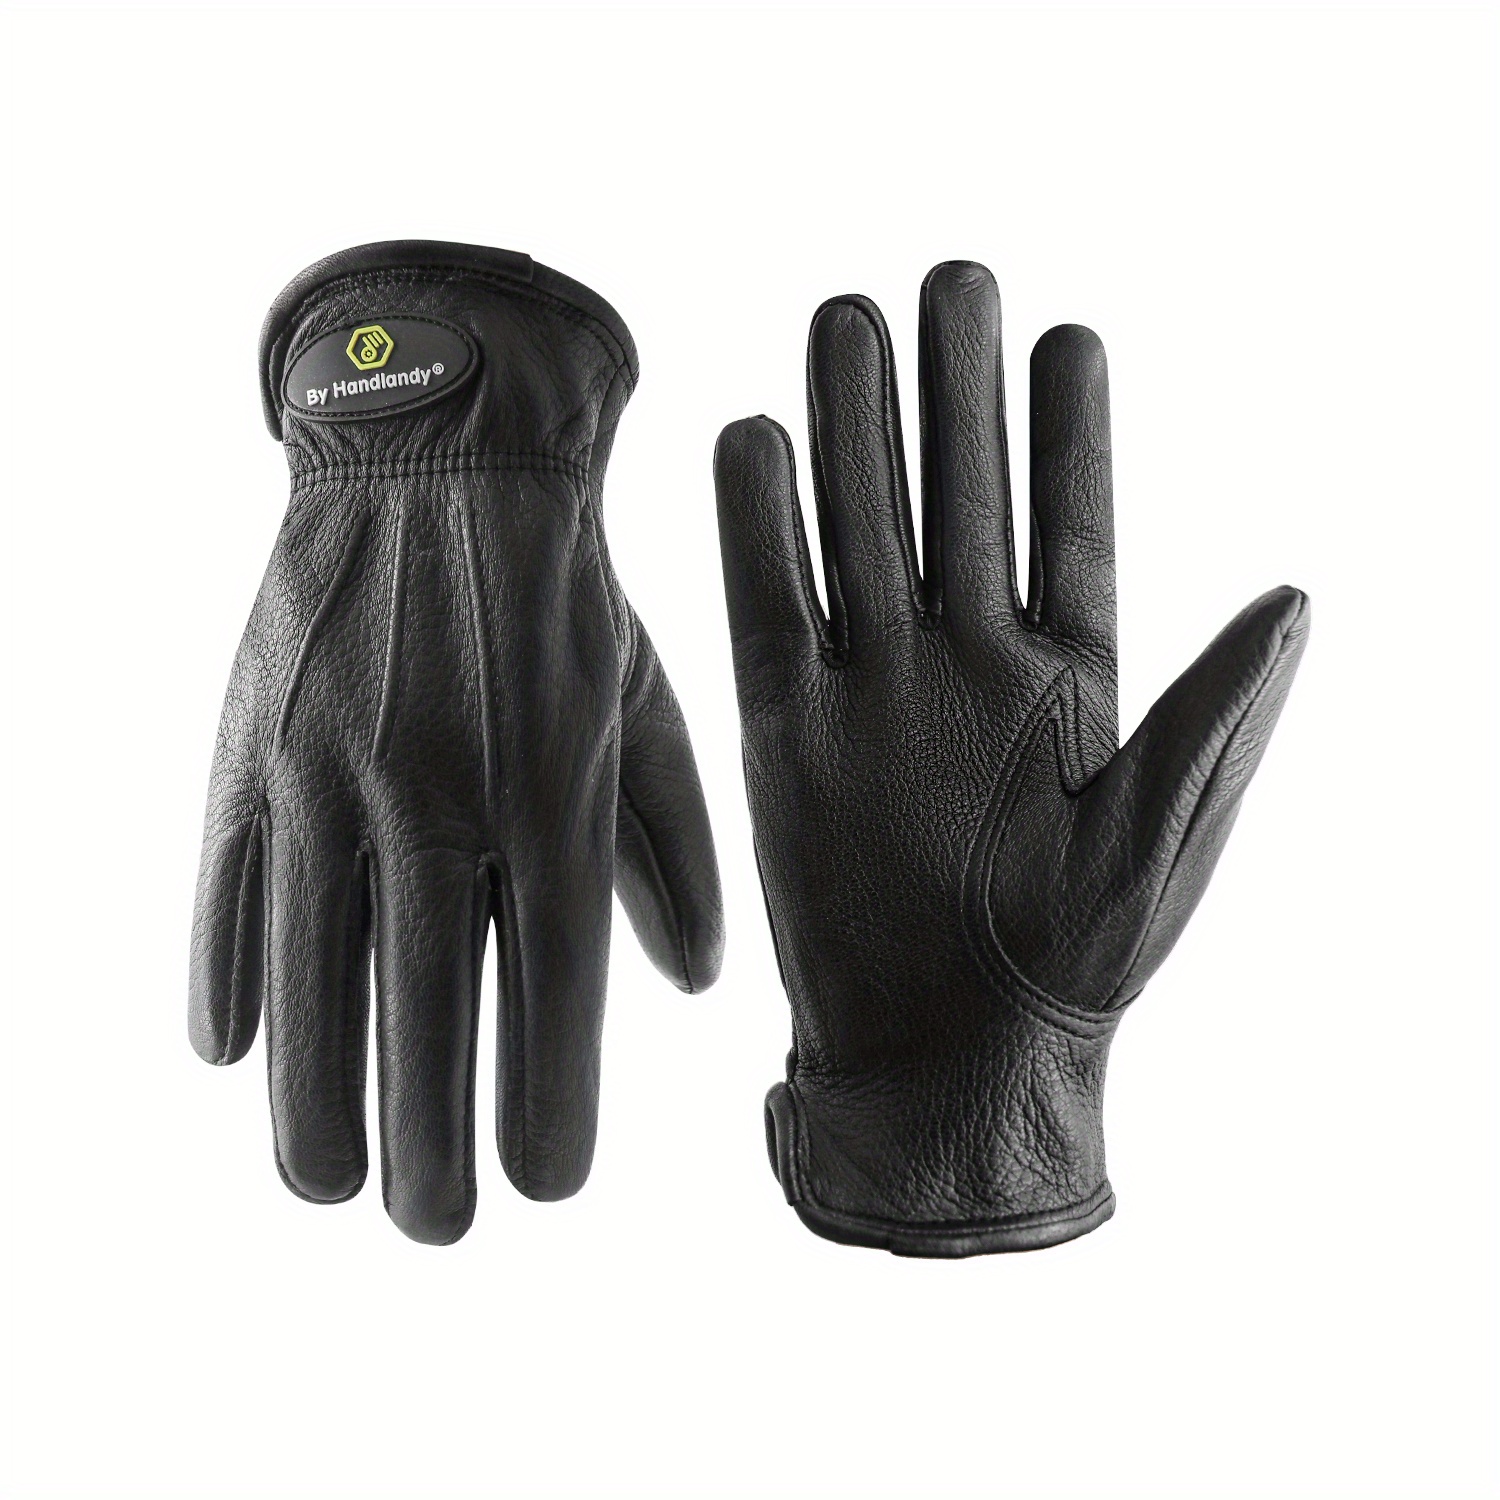 OriStout Waterproof Winter Work Gloves Bulk Pack for Men and Women